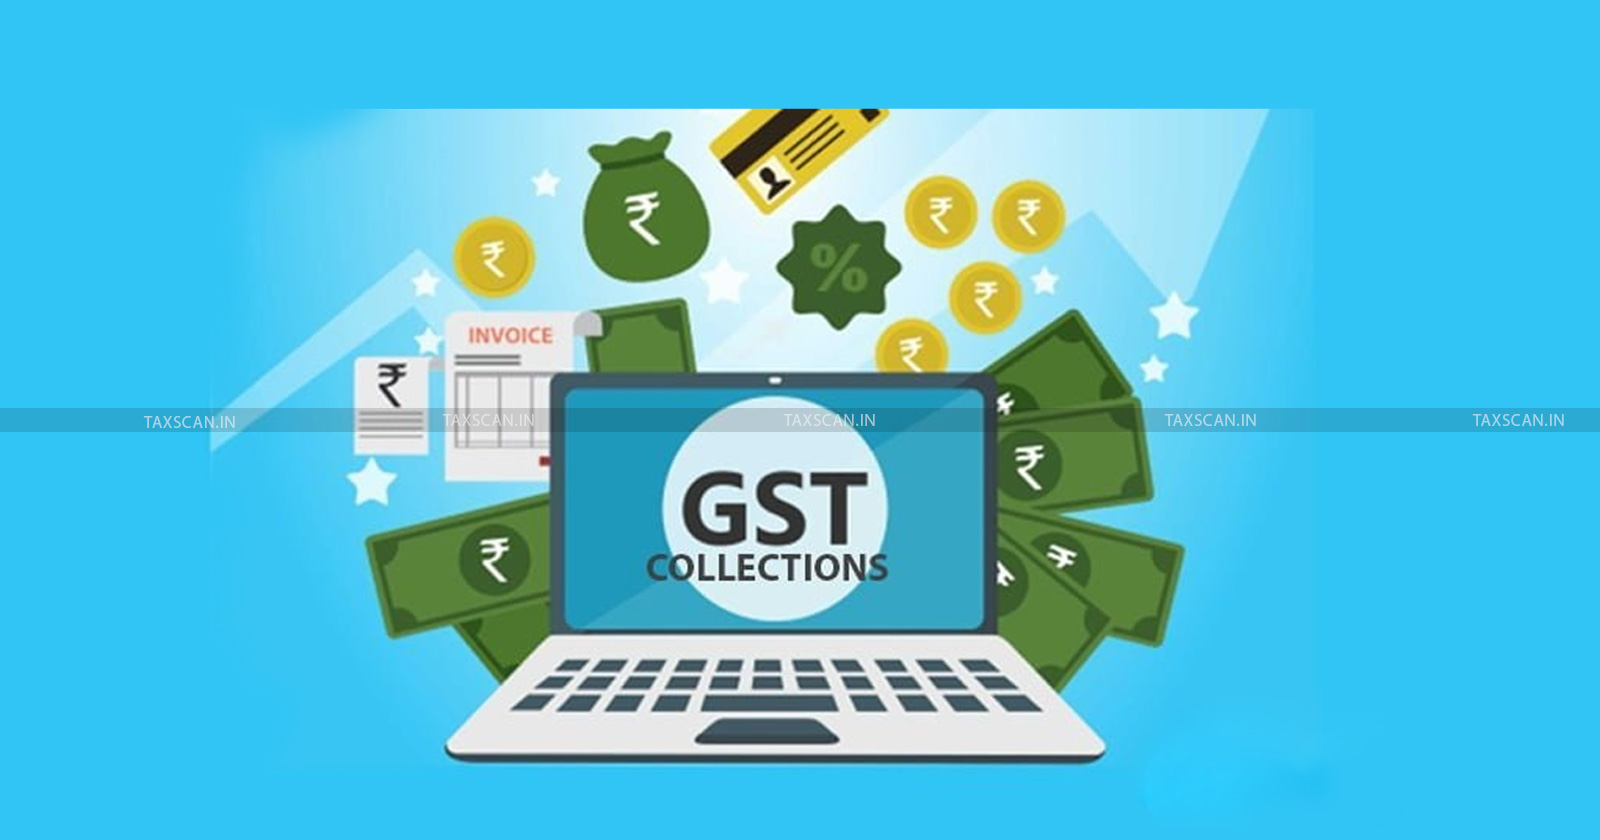 GST collection - Milestone - Economic Momentum - Efficient Tax Realisation - Finance Minister - taxscan